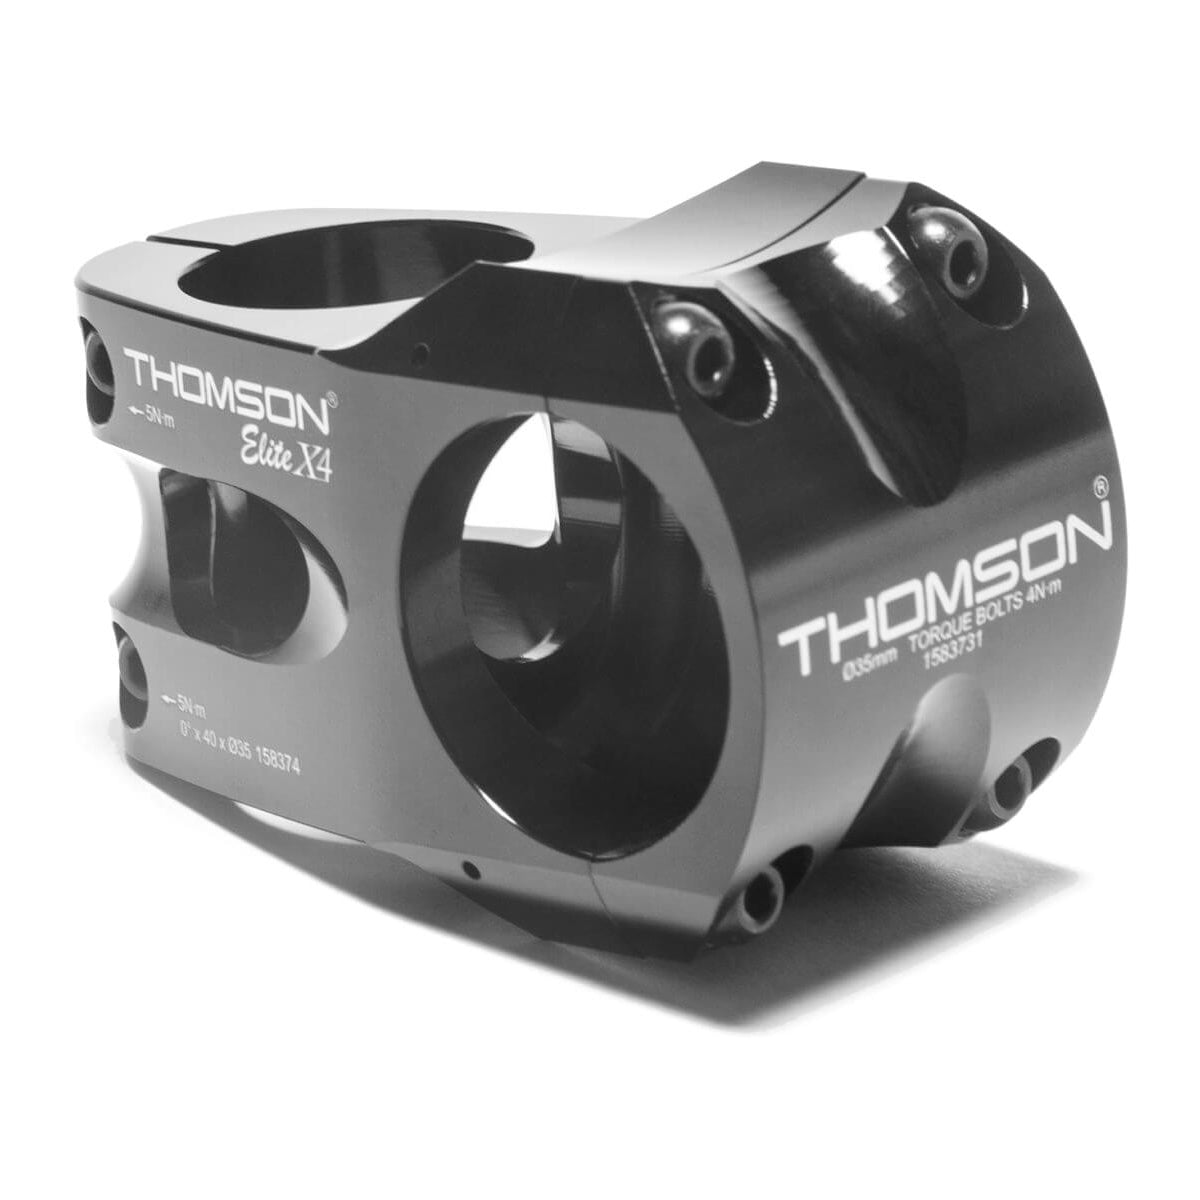 Thomson - MTB Direct Australia